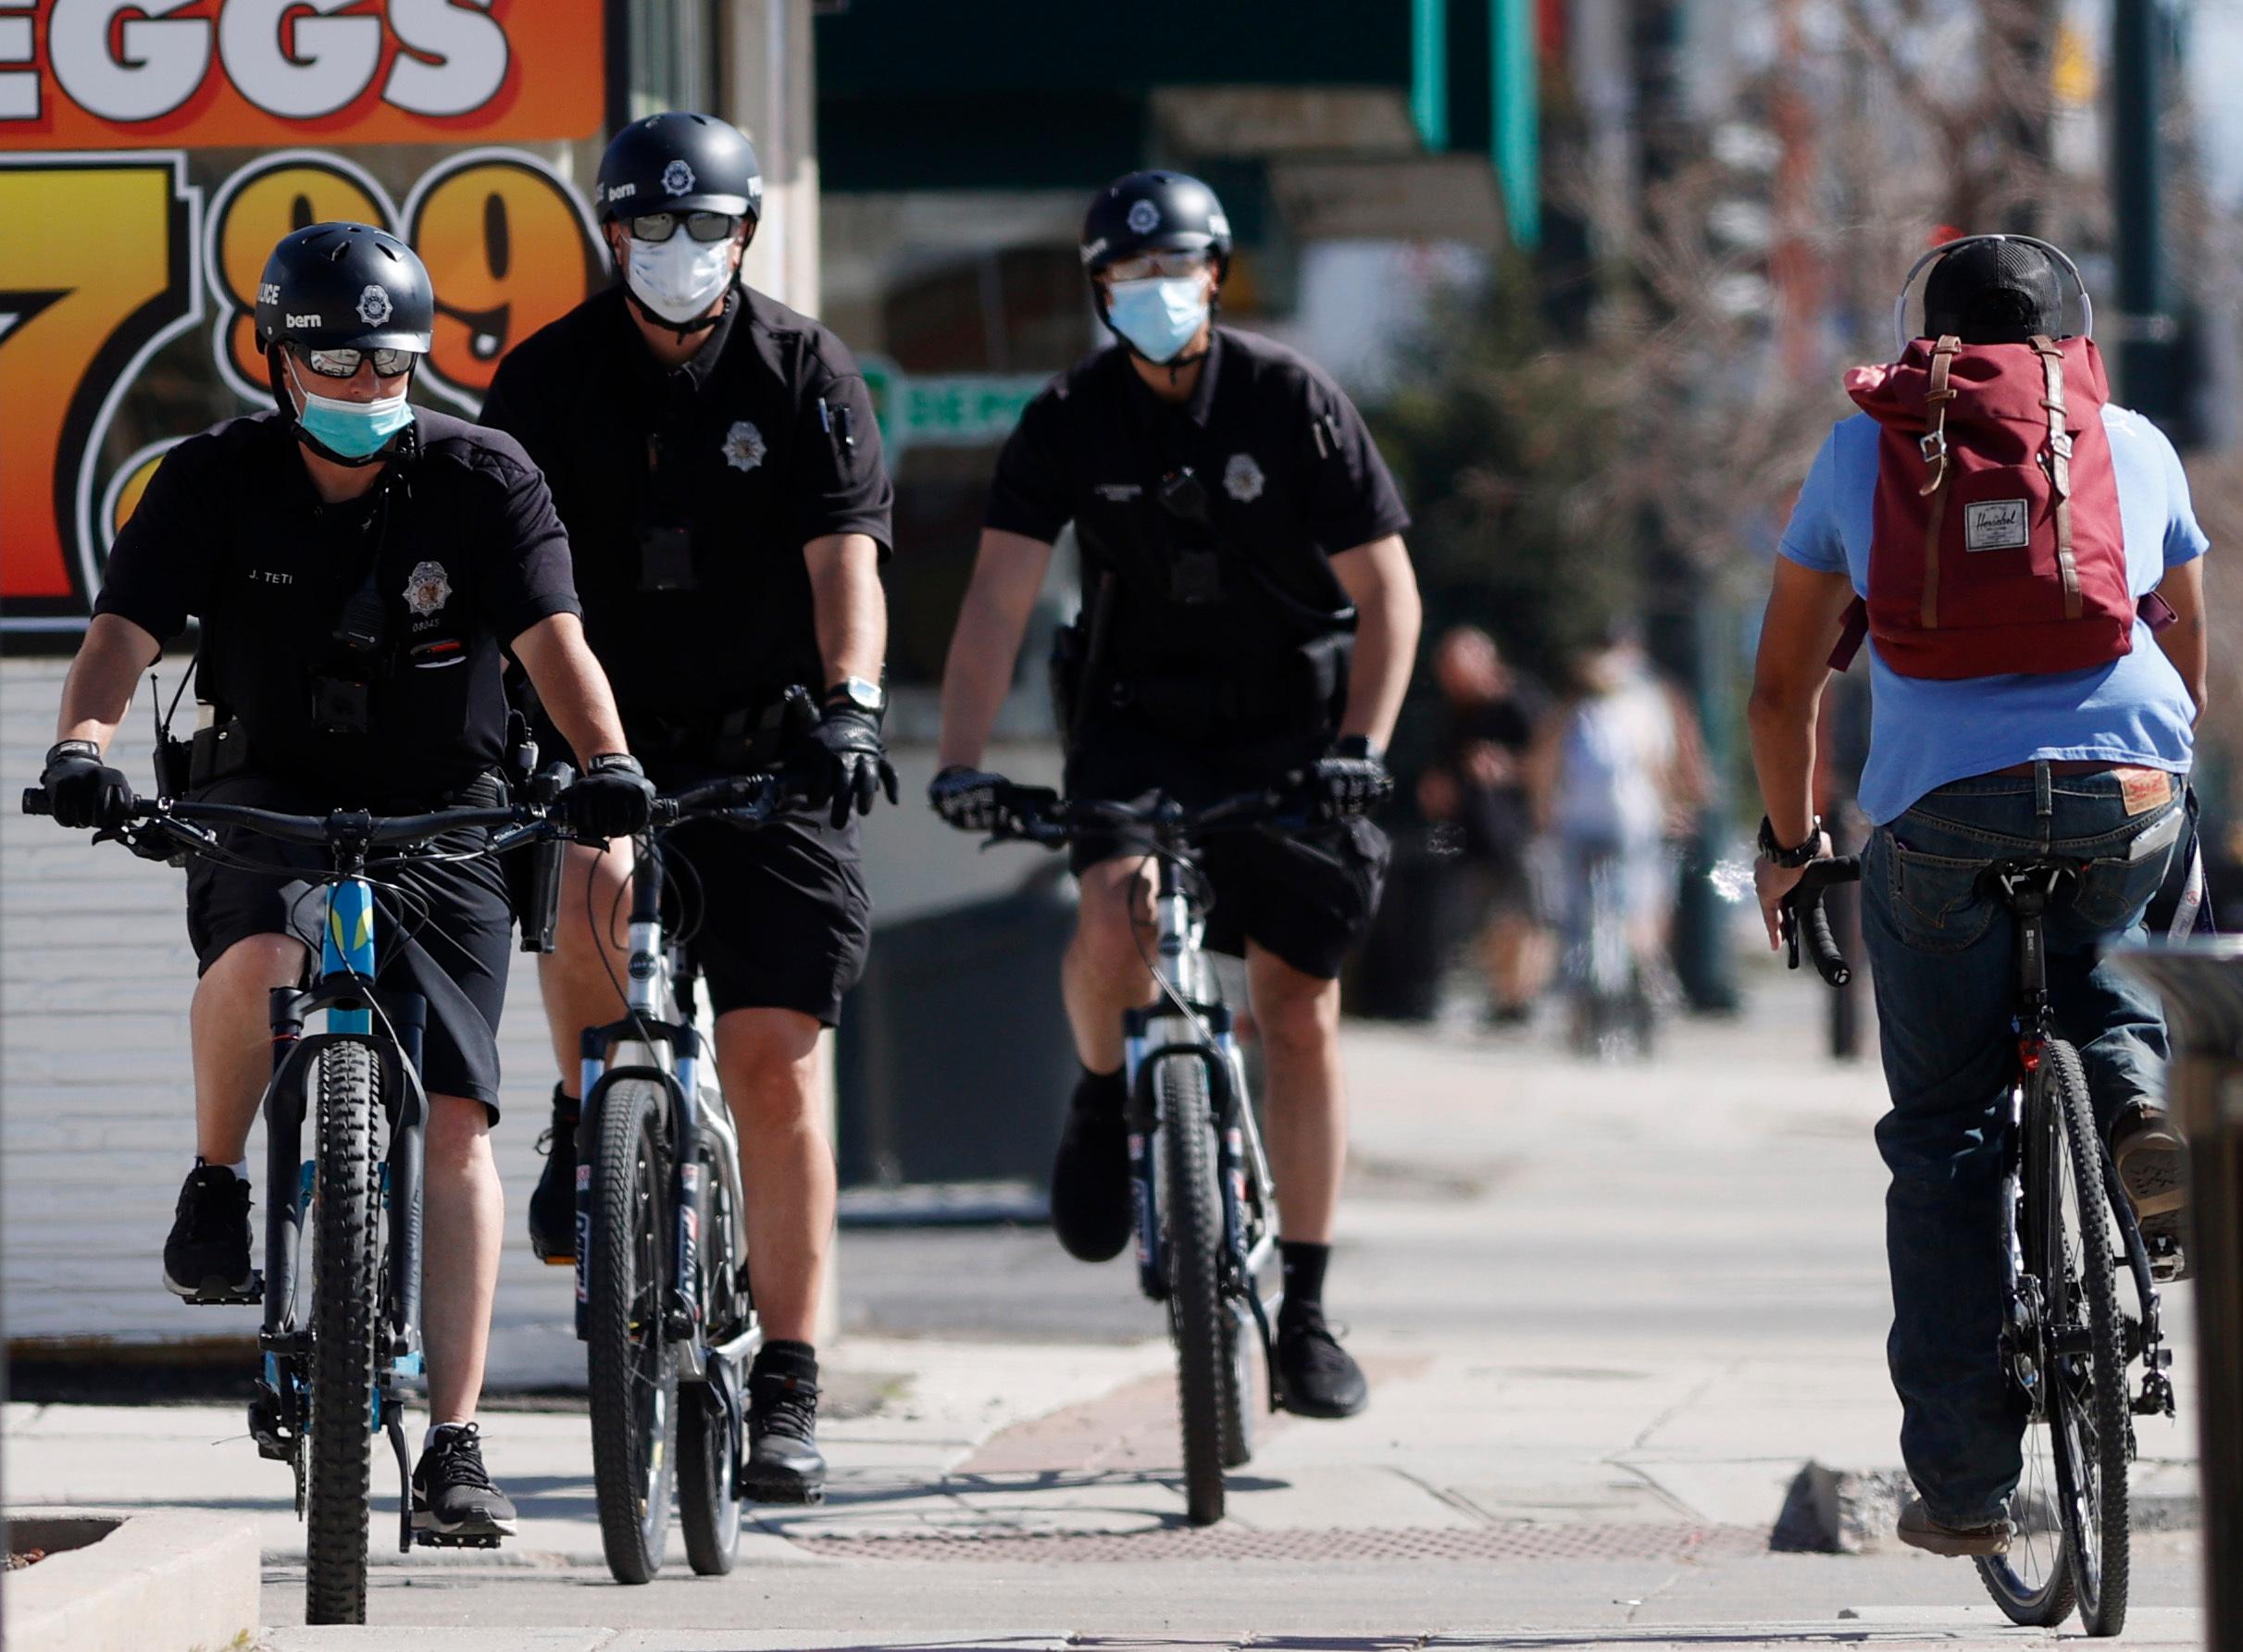 Denver Police Department bicycle patrol in face masks, r m